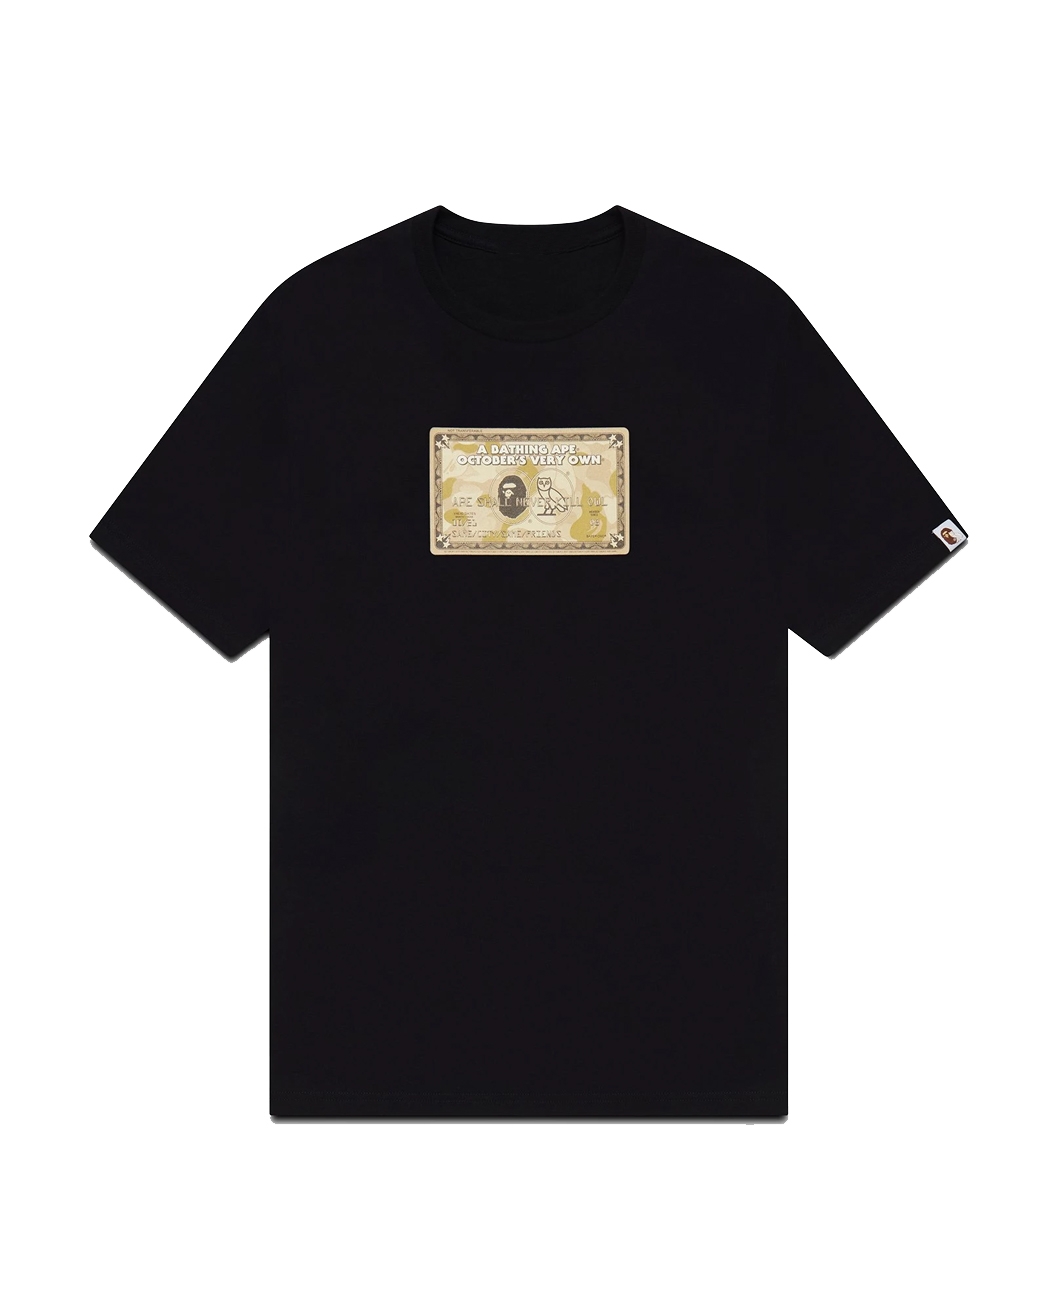 OVO x Bape Gold Card T-Shirt – Black